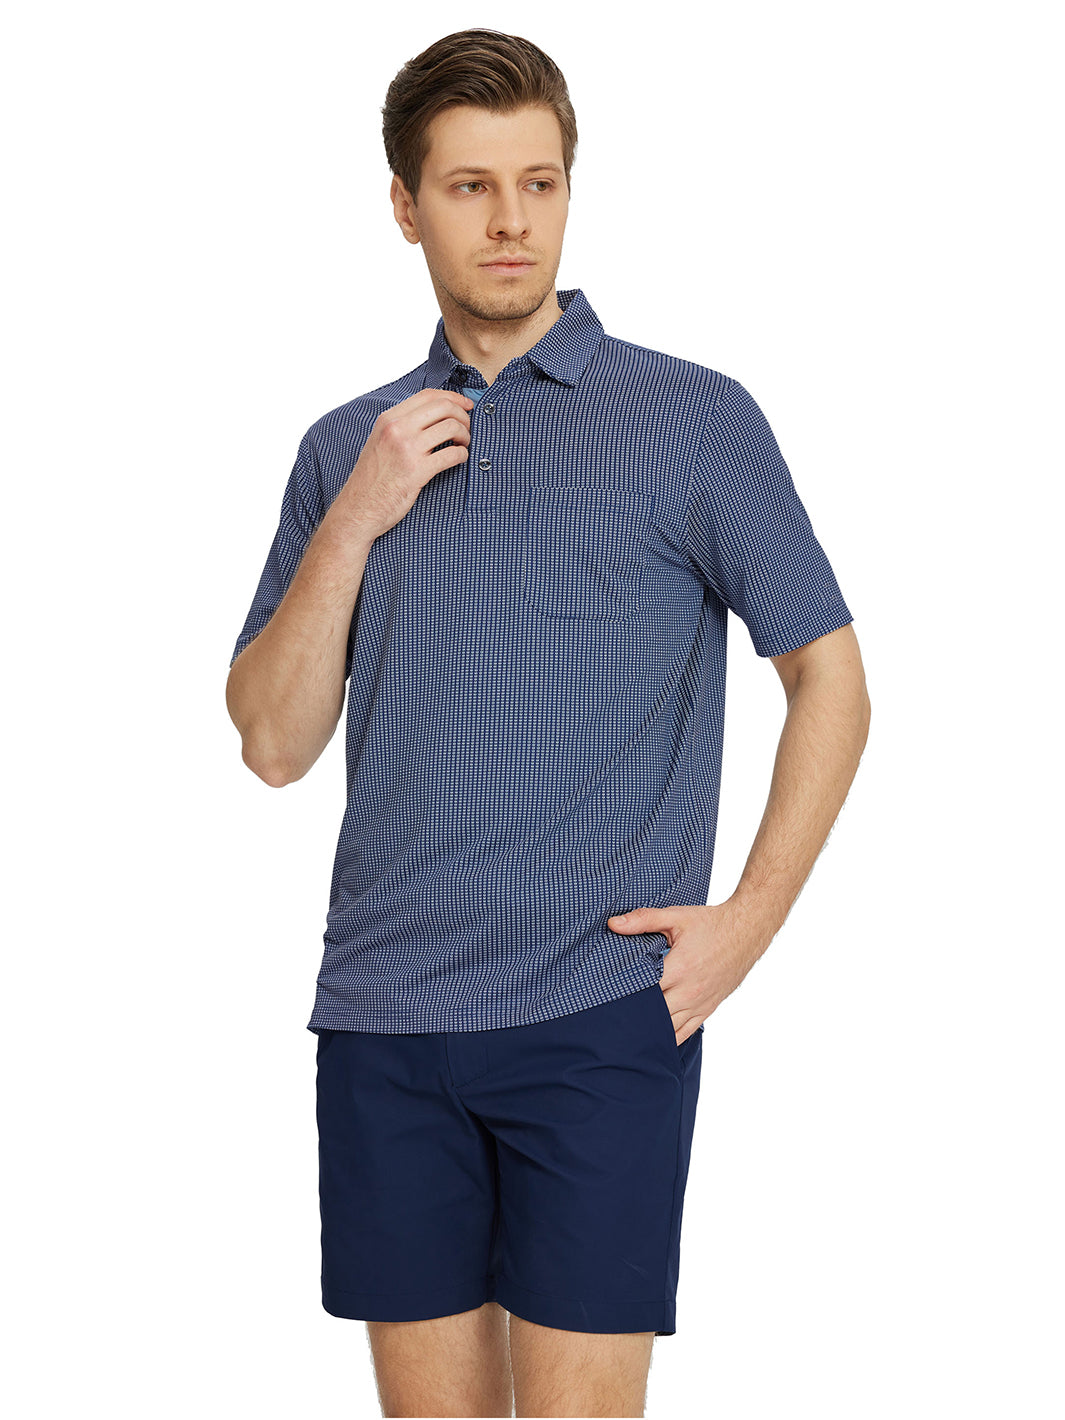 Men's Dry Fit Jacquard Pocket Golf Shirts-Navy